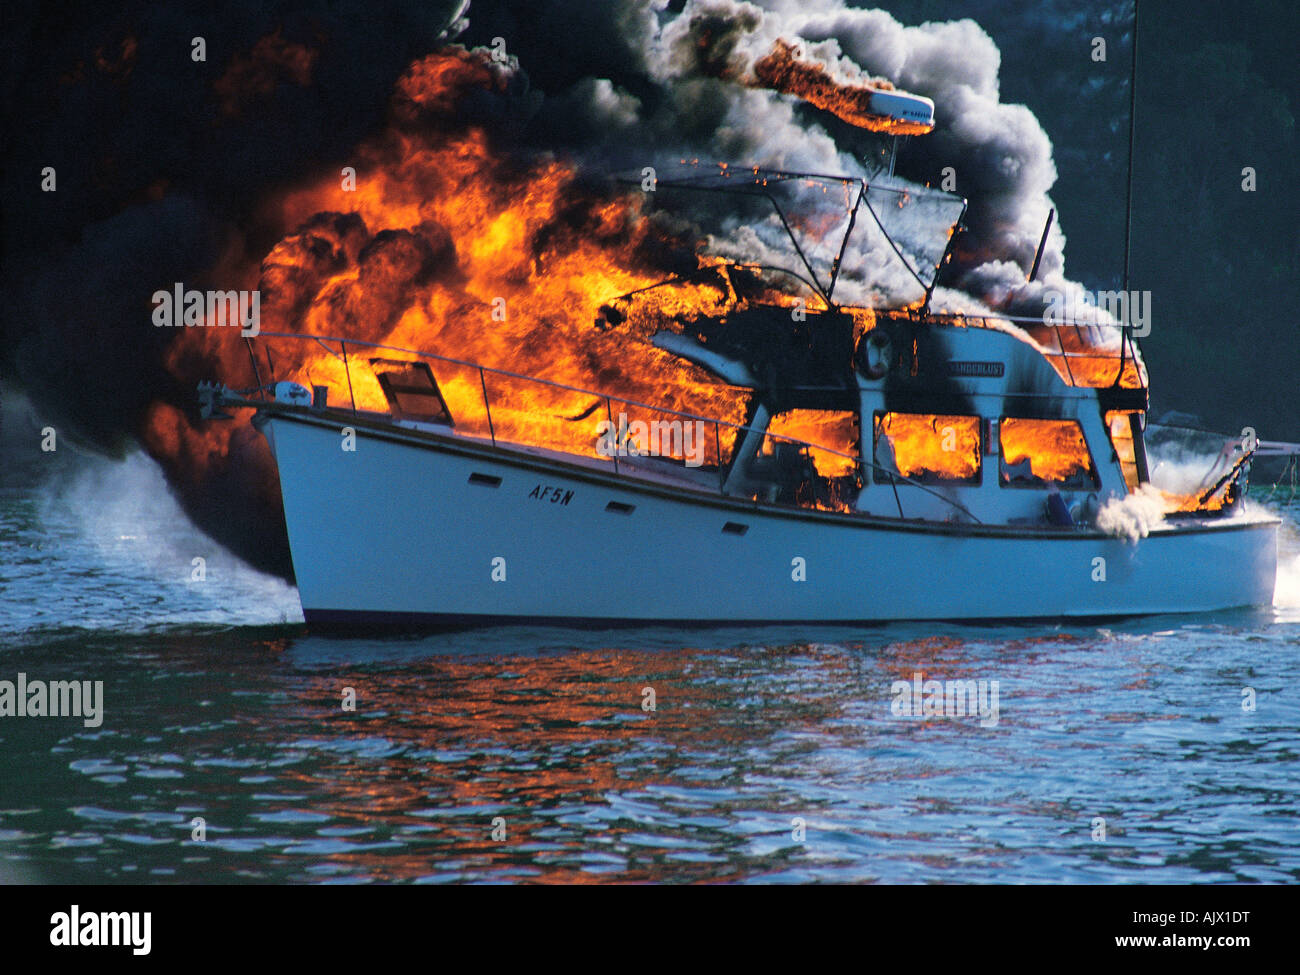 Australia. Motor yacht. Boat on fire. Stock Photo